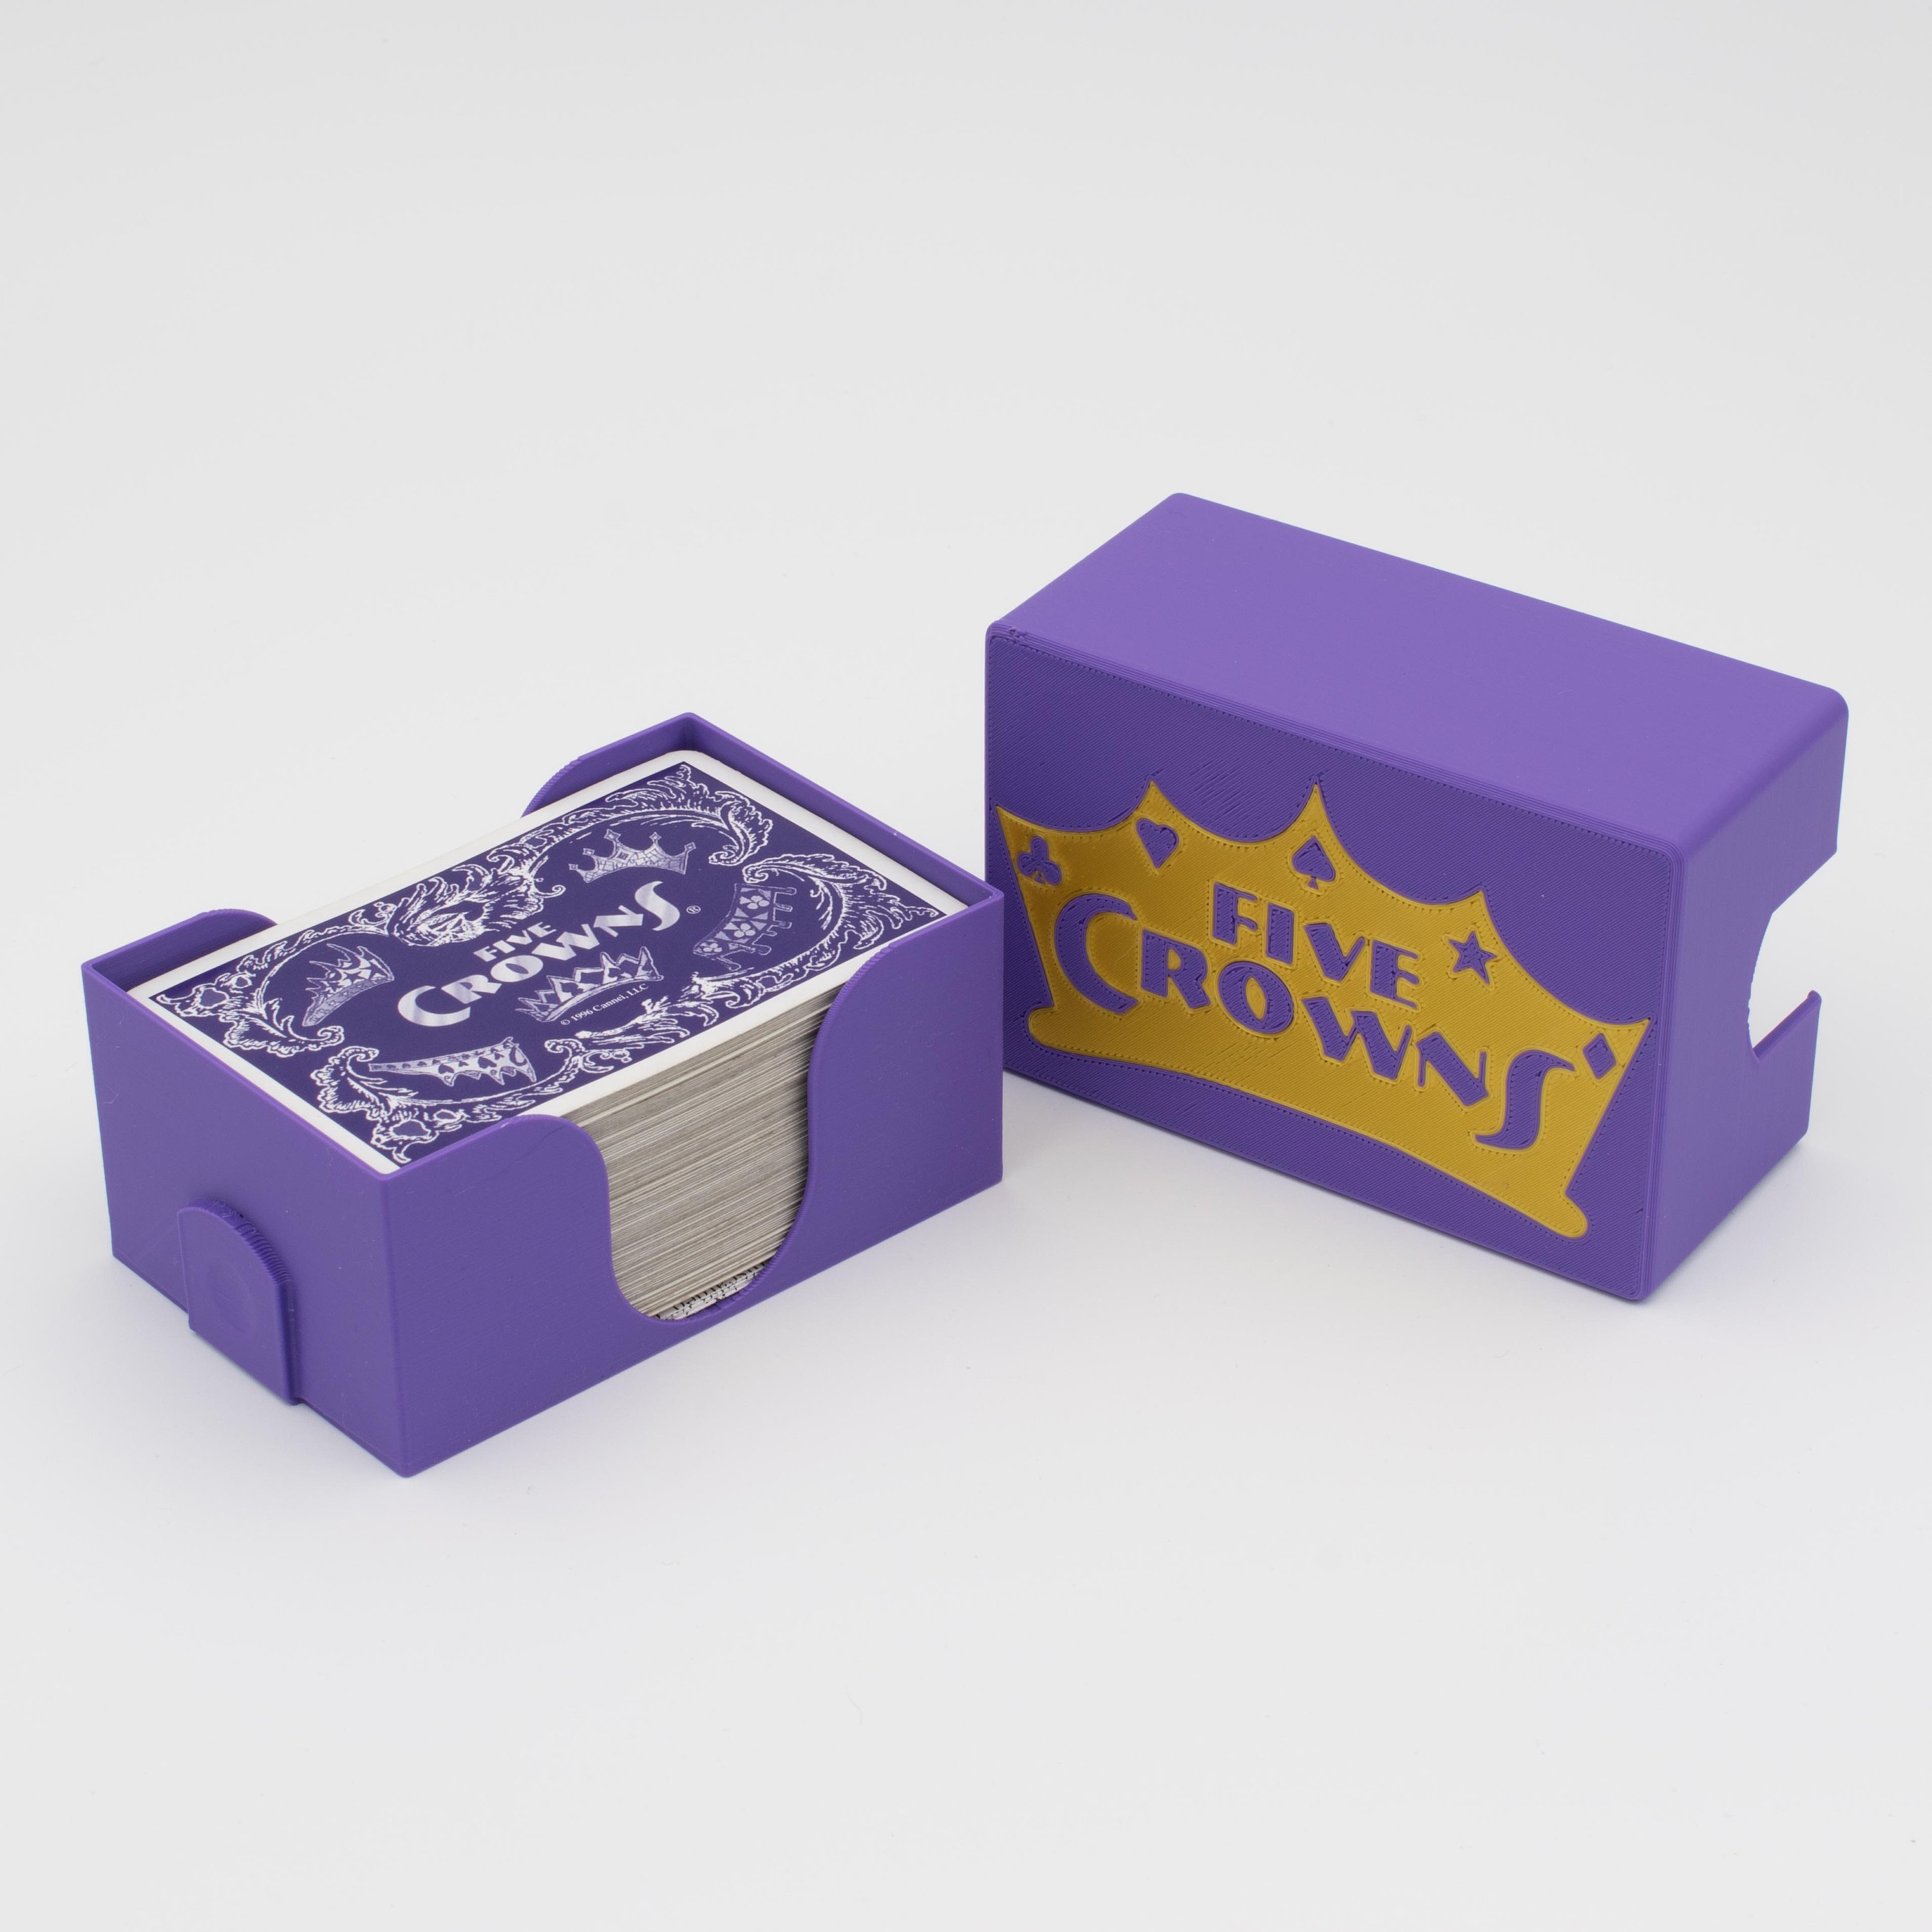 Five Crowns Card Game Storage Case/box 3D Printed 